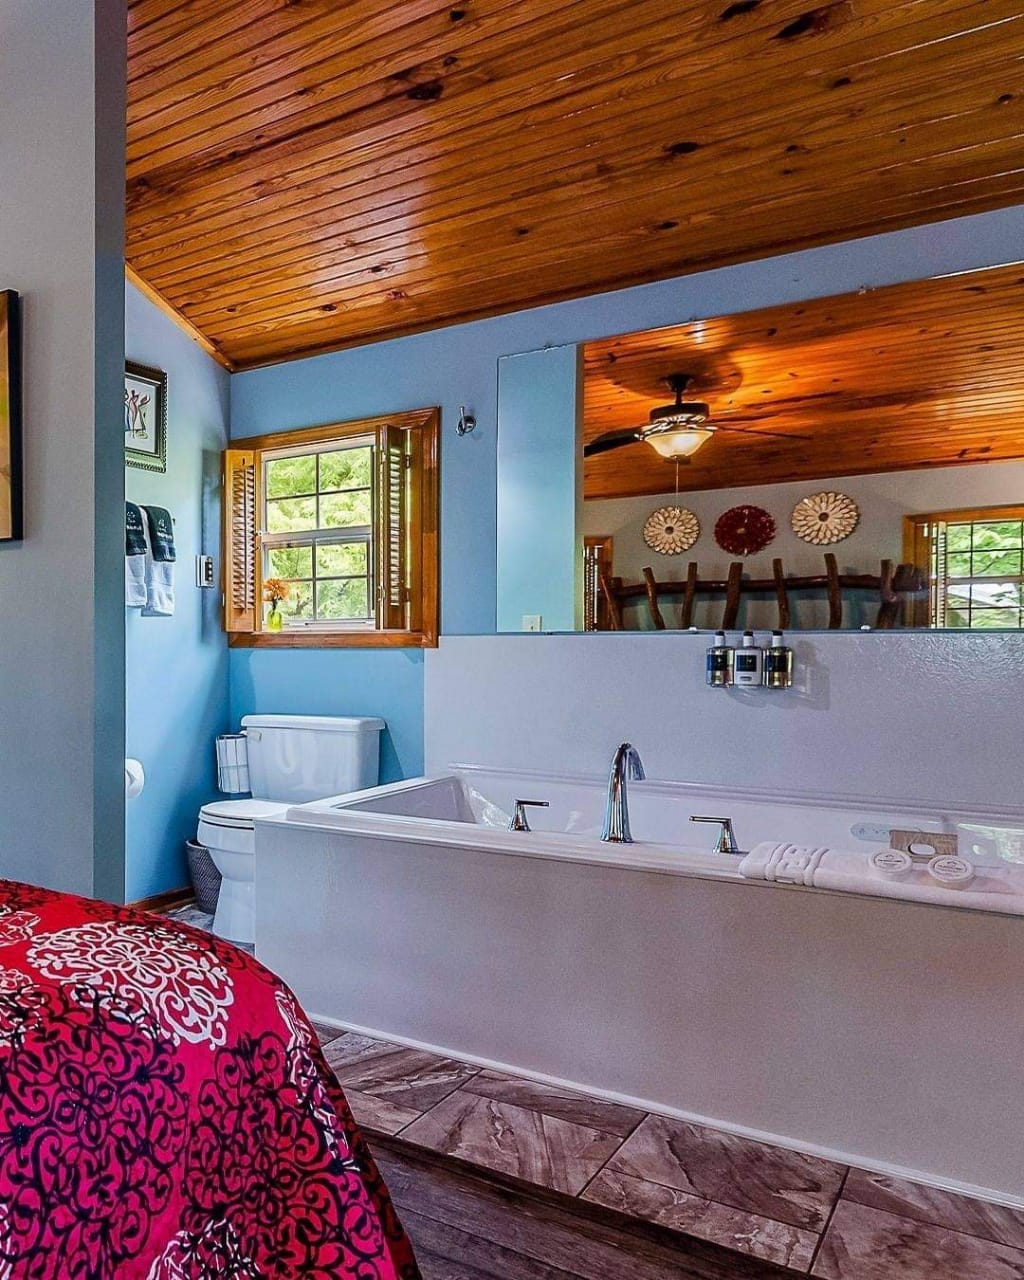 Attractive Bathroom Interior Design - Source: The Woods Cabins